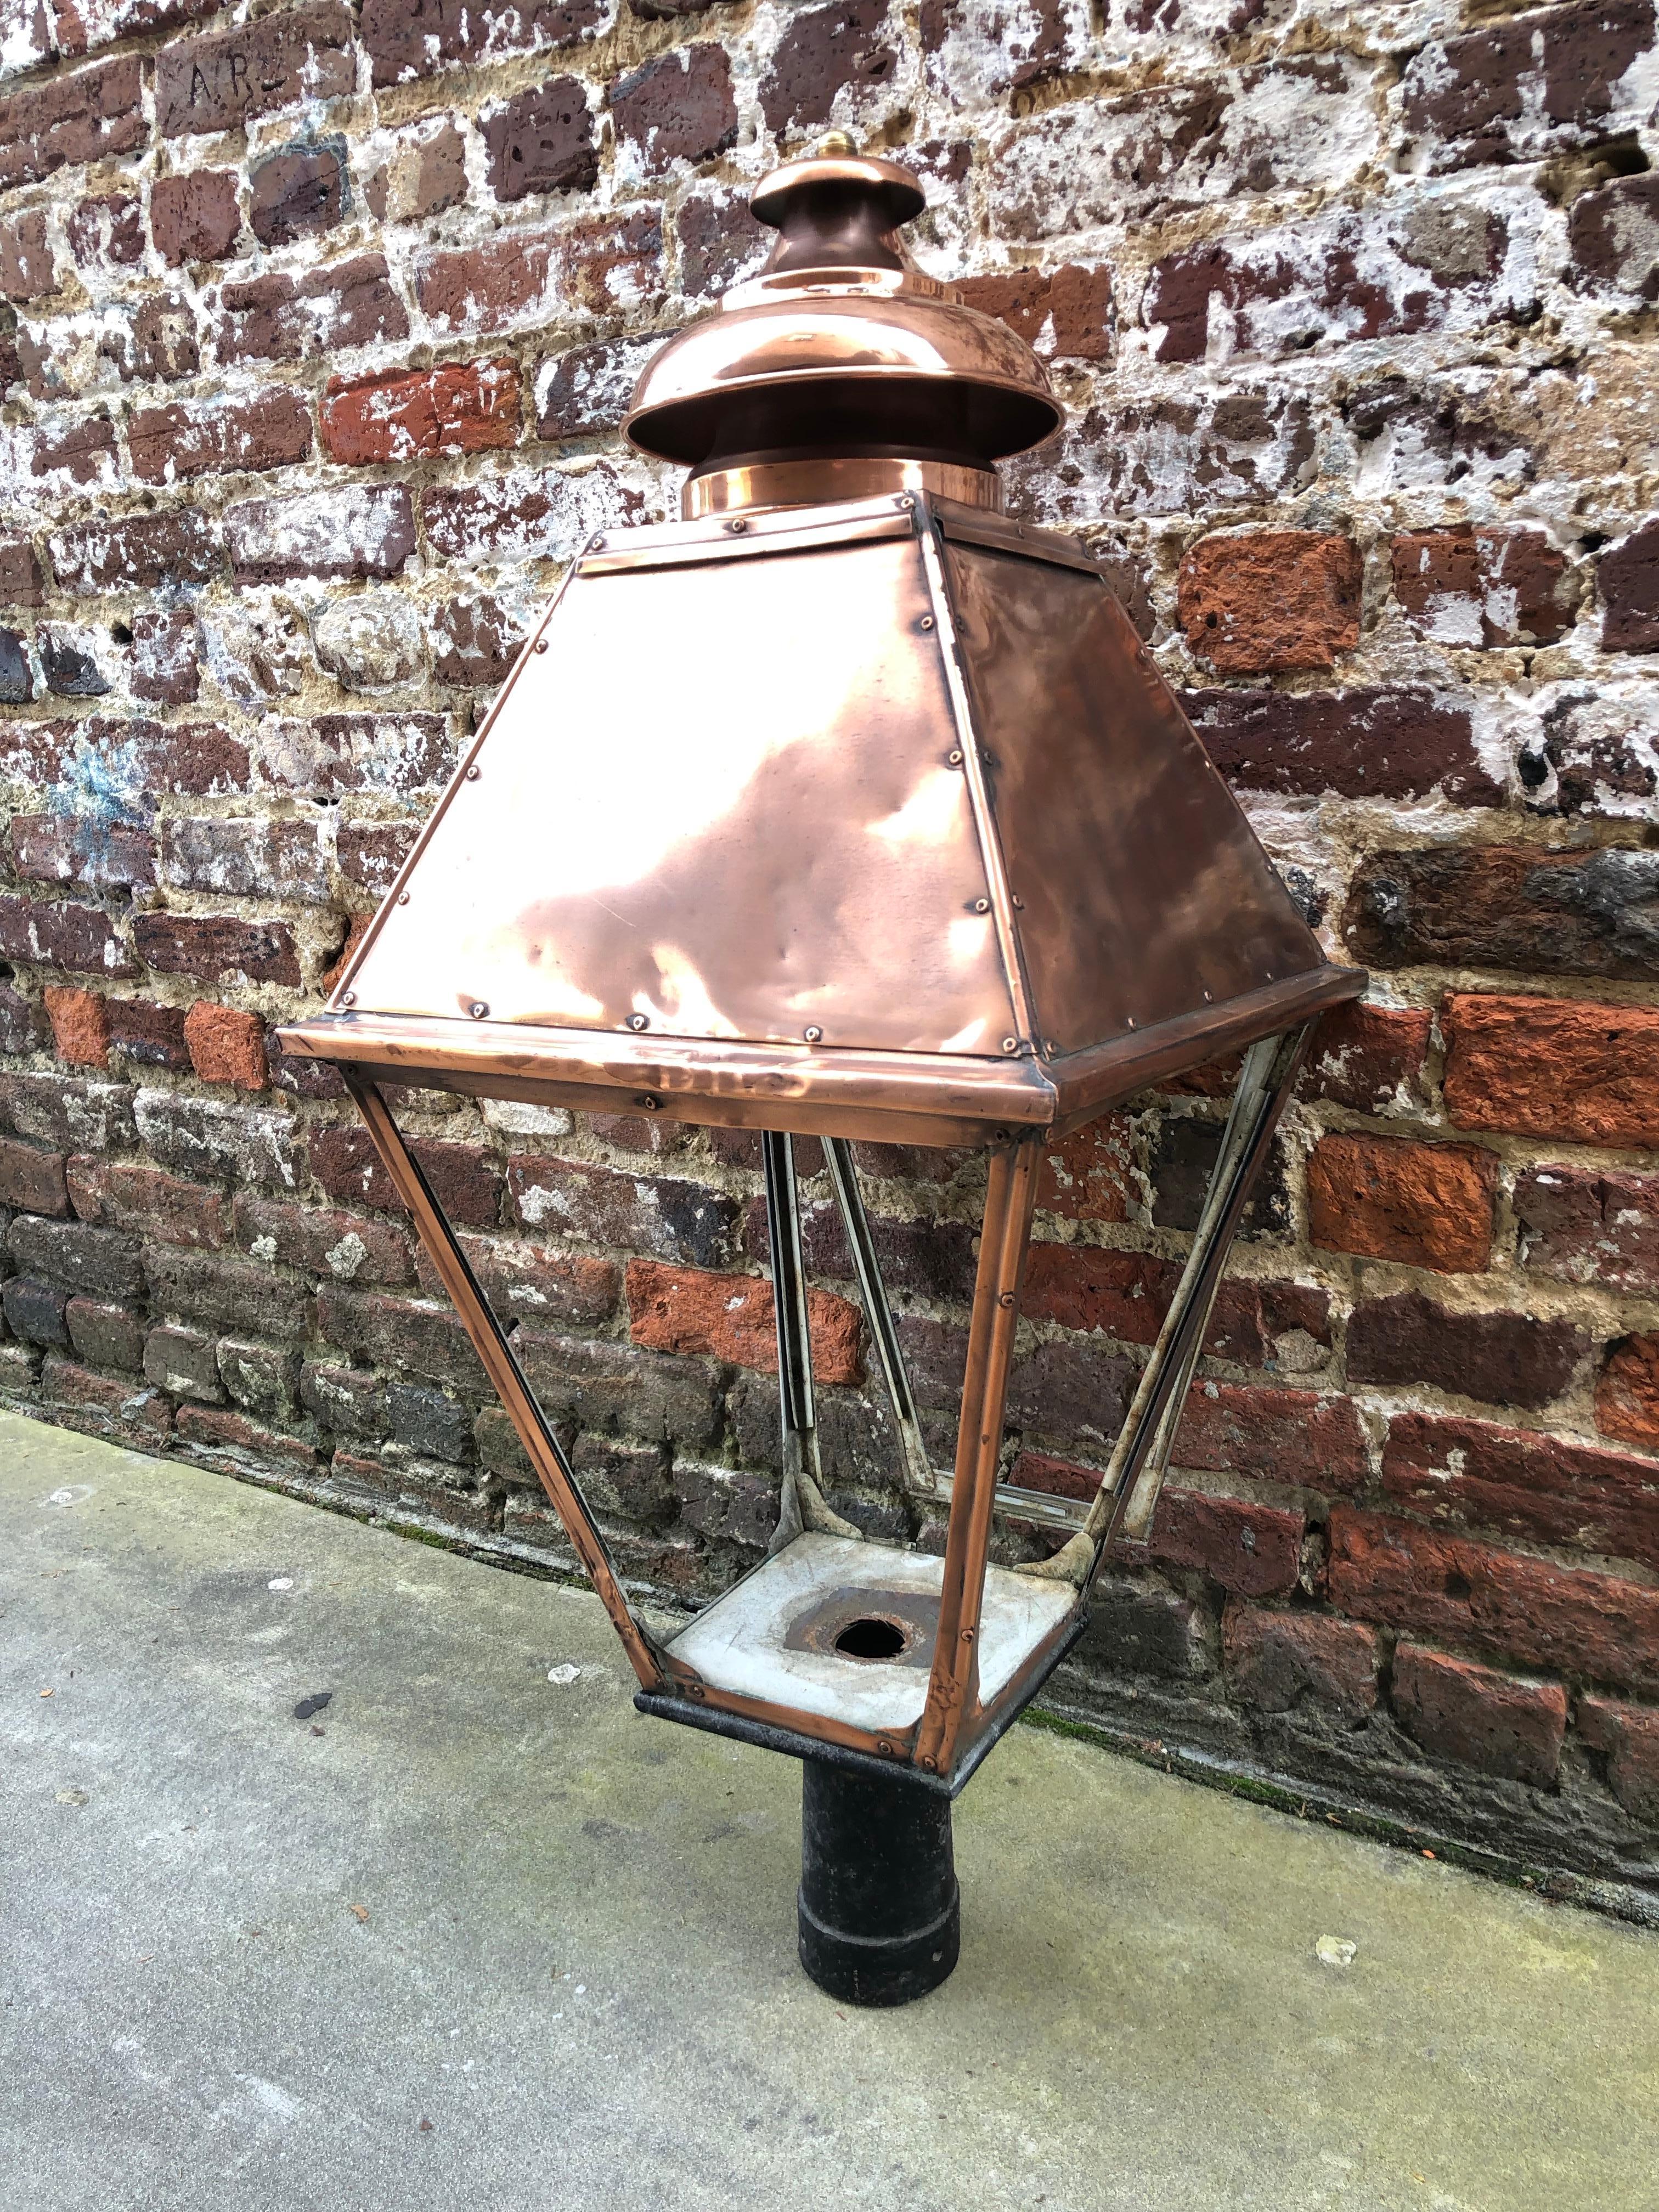 large copper lantern